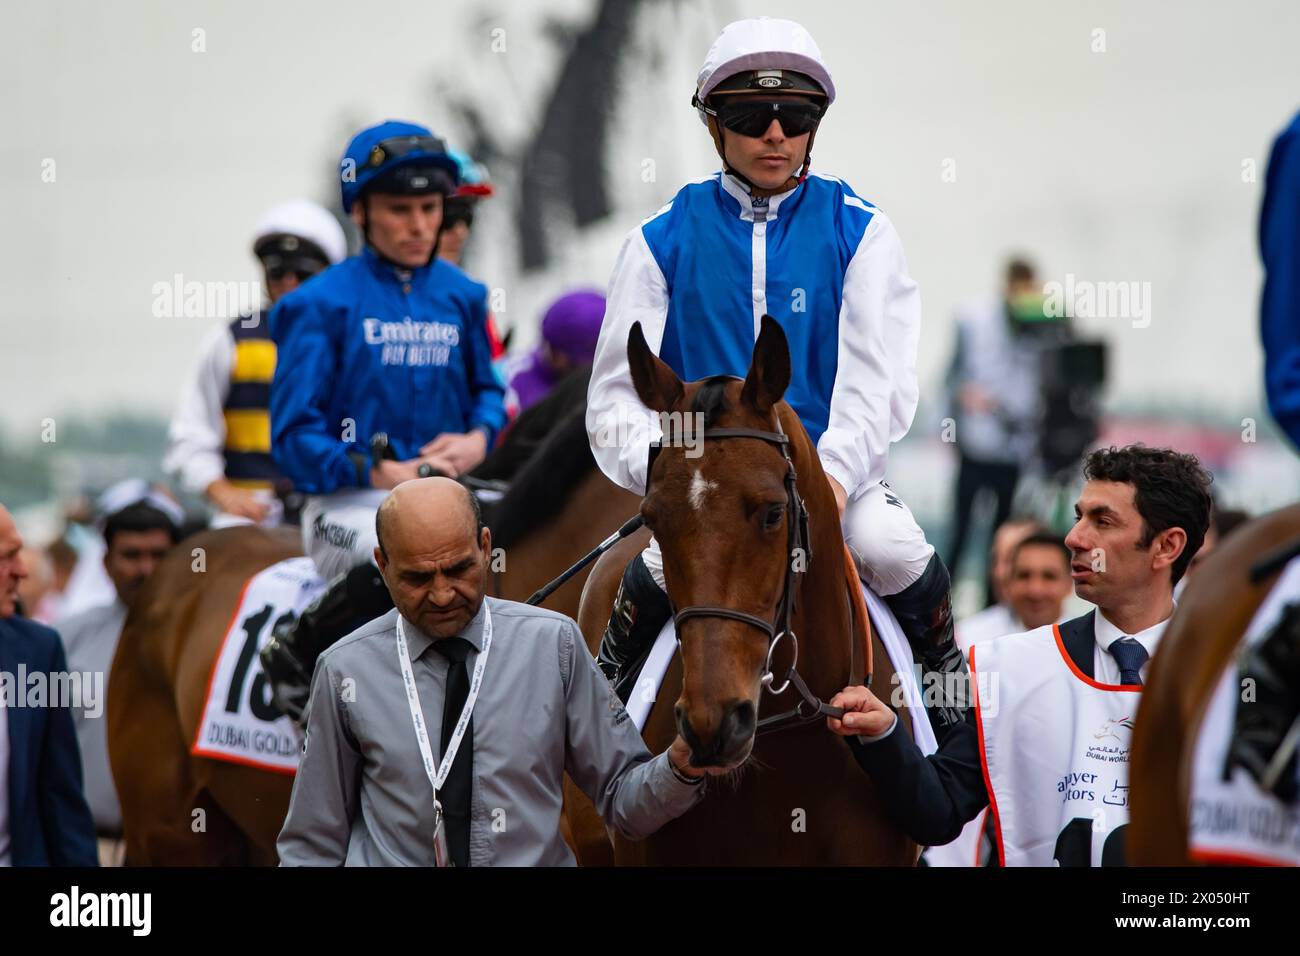 Sober und Maxime Guyon starten den Dubai Gold Cup auf der Meydan Racecourse, Dubai, VAE, 24.03.30. Credit JTW equine Images / Alamy. Stockfoto